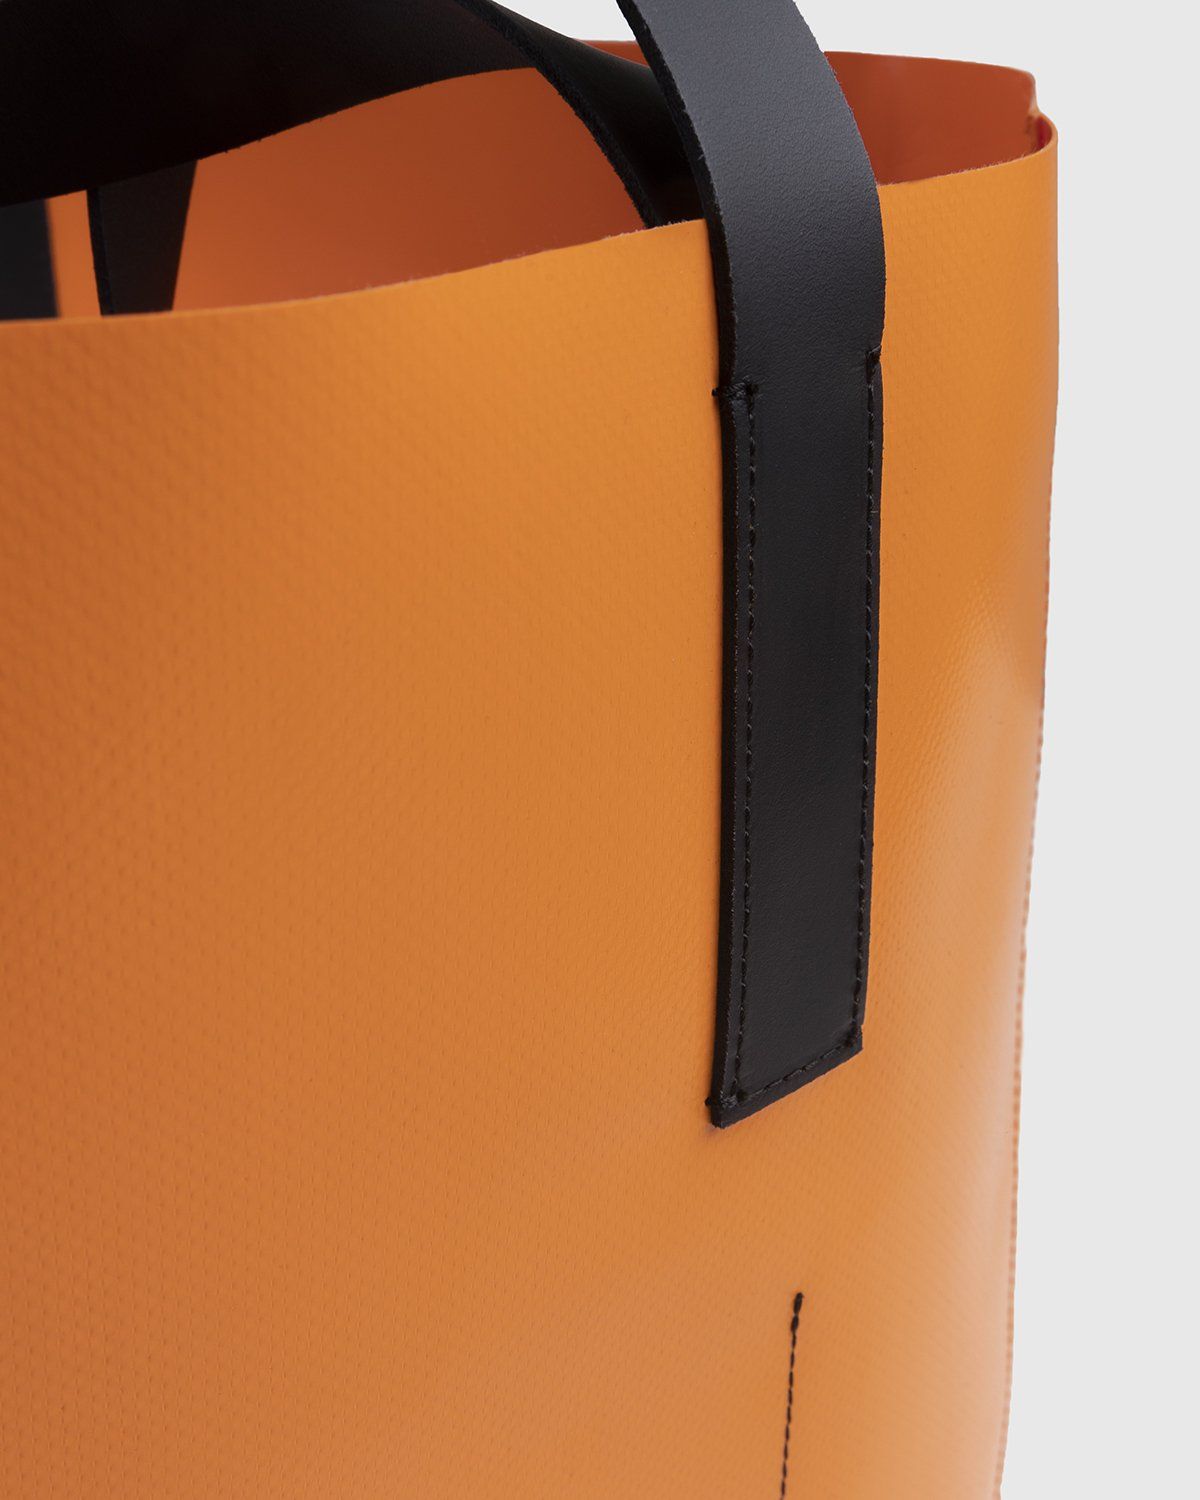 Dries van Noten – Tote Bag Orange - Bags - Orange - Image 4